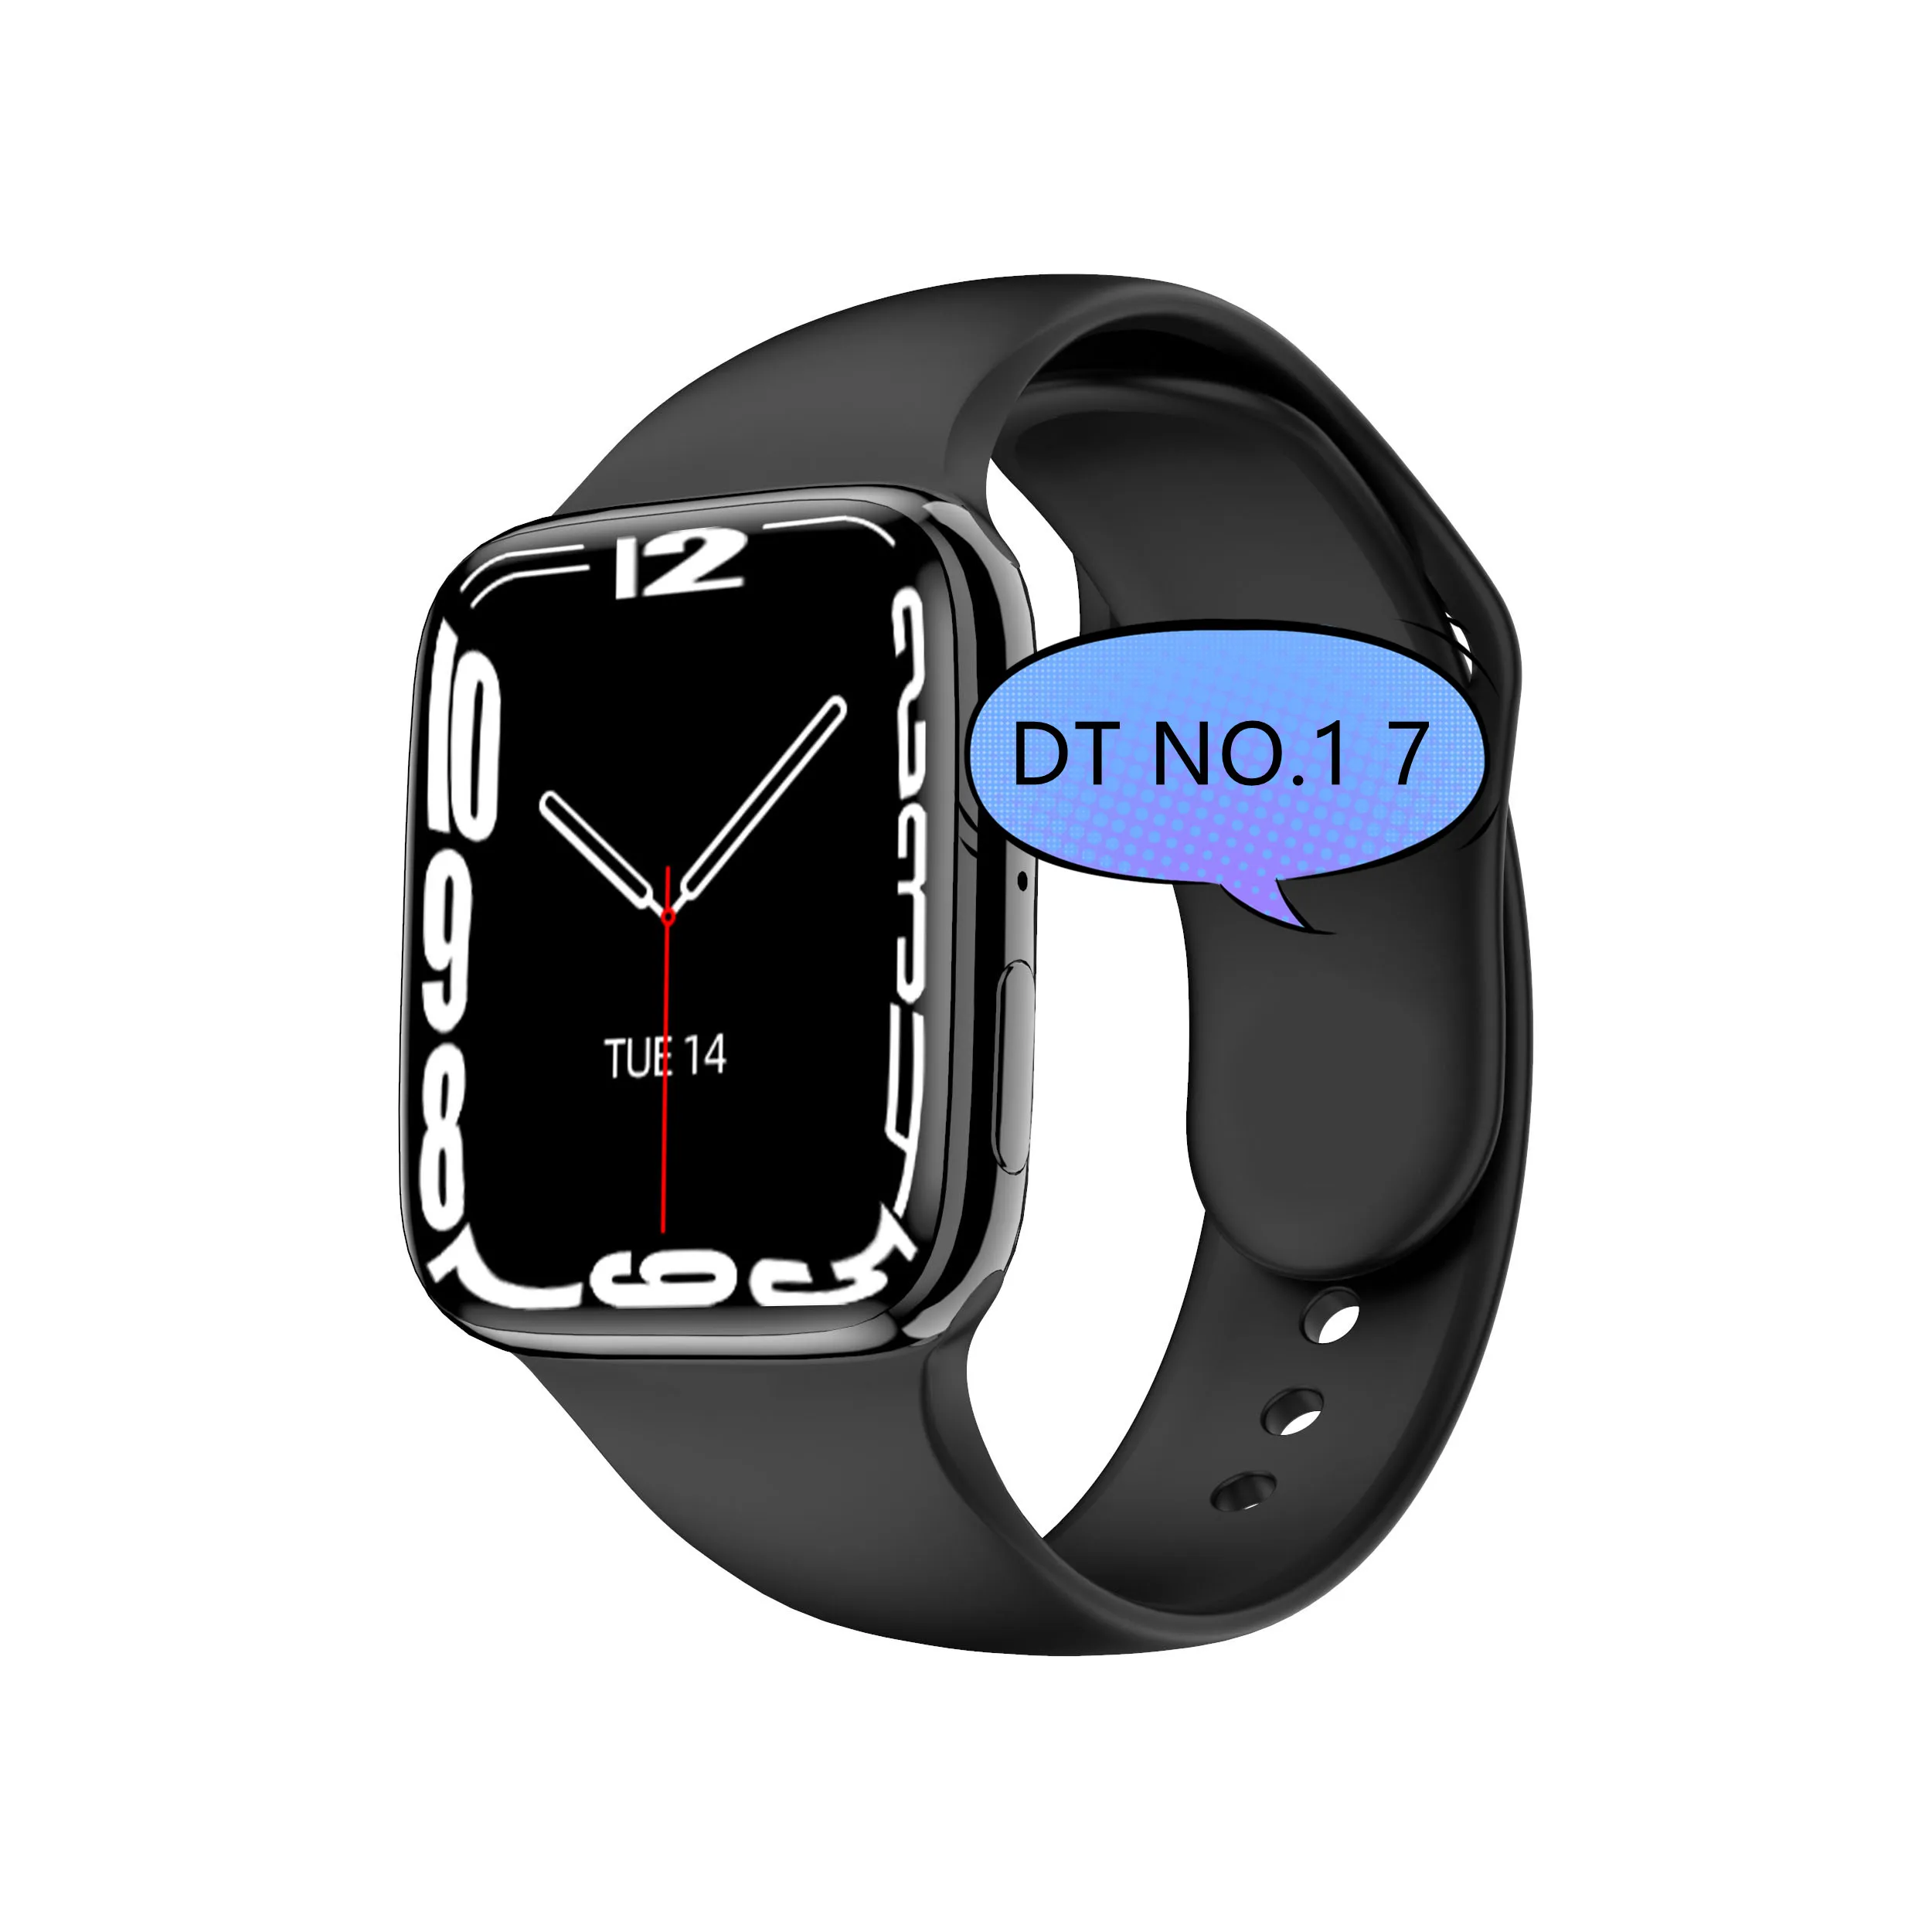 

DT NO.1 7 Latest 1.9 Inch Smartwatch NFC 500+ Watch Faces IP68 BT Call GPS Series 7 Reloj Inteligente Smartwatch DT NO.1 7